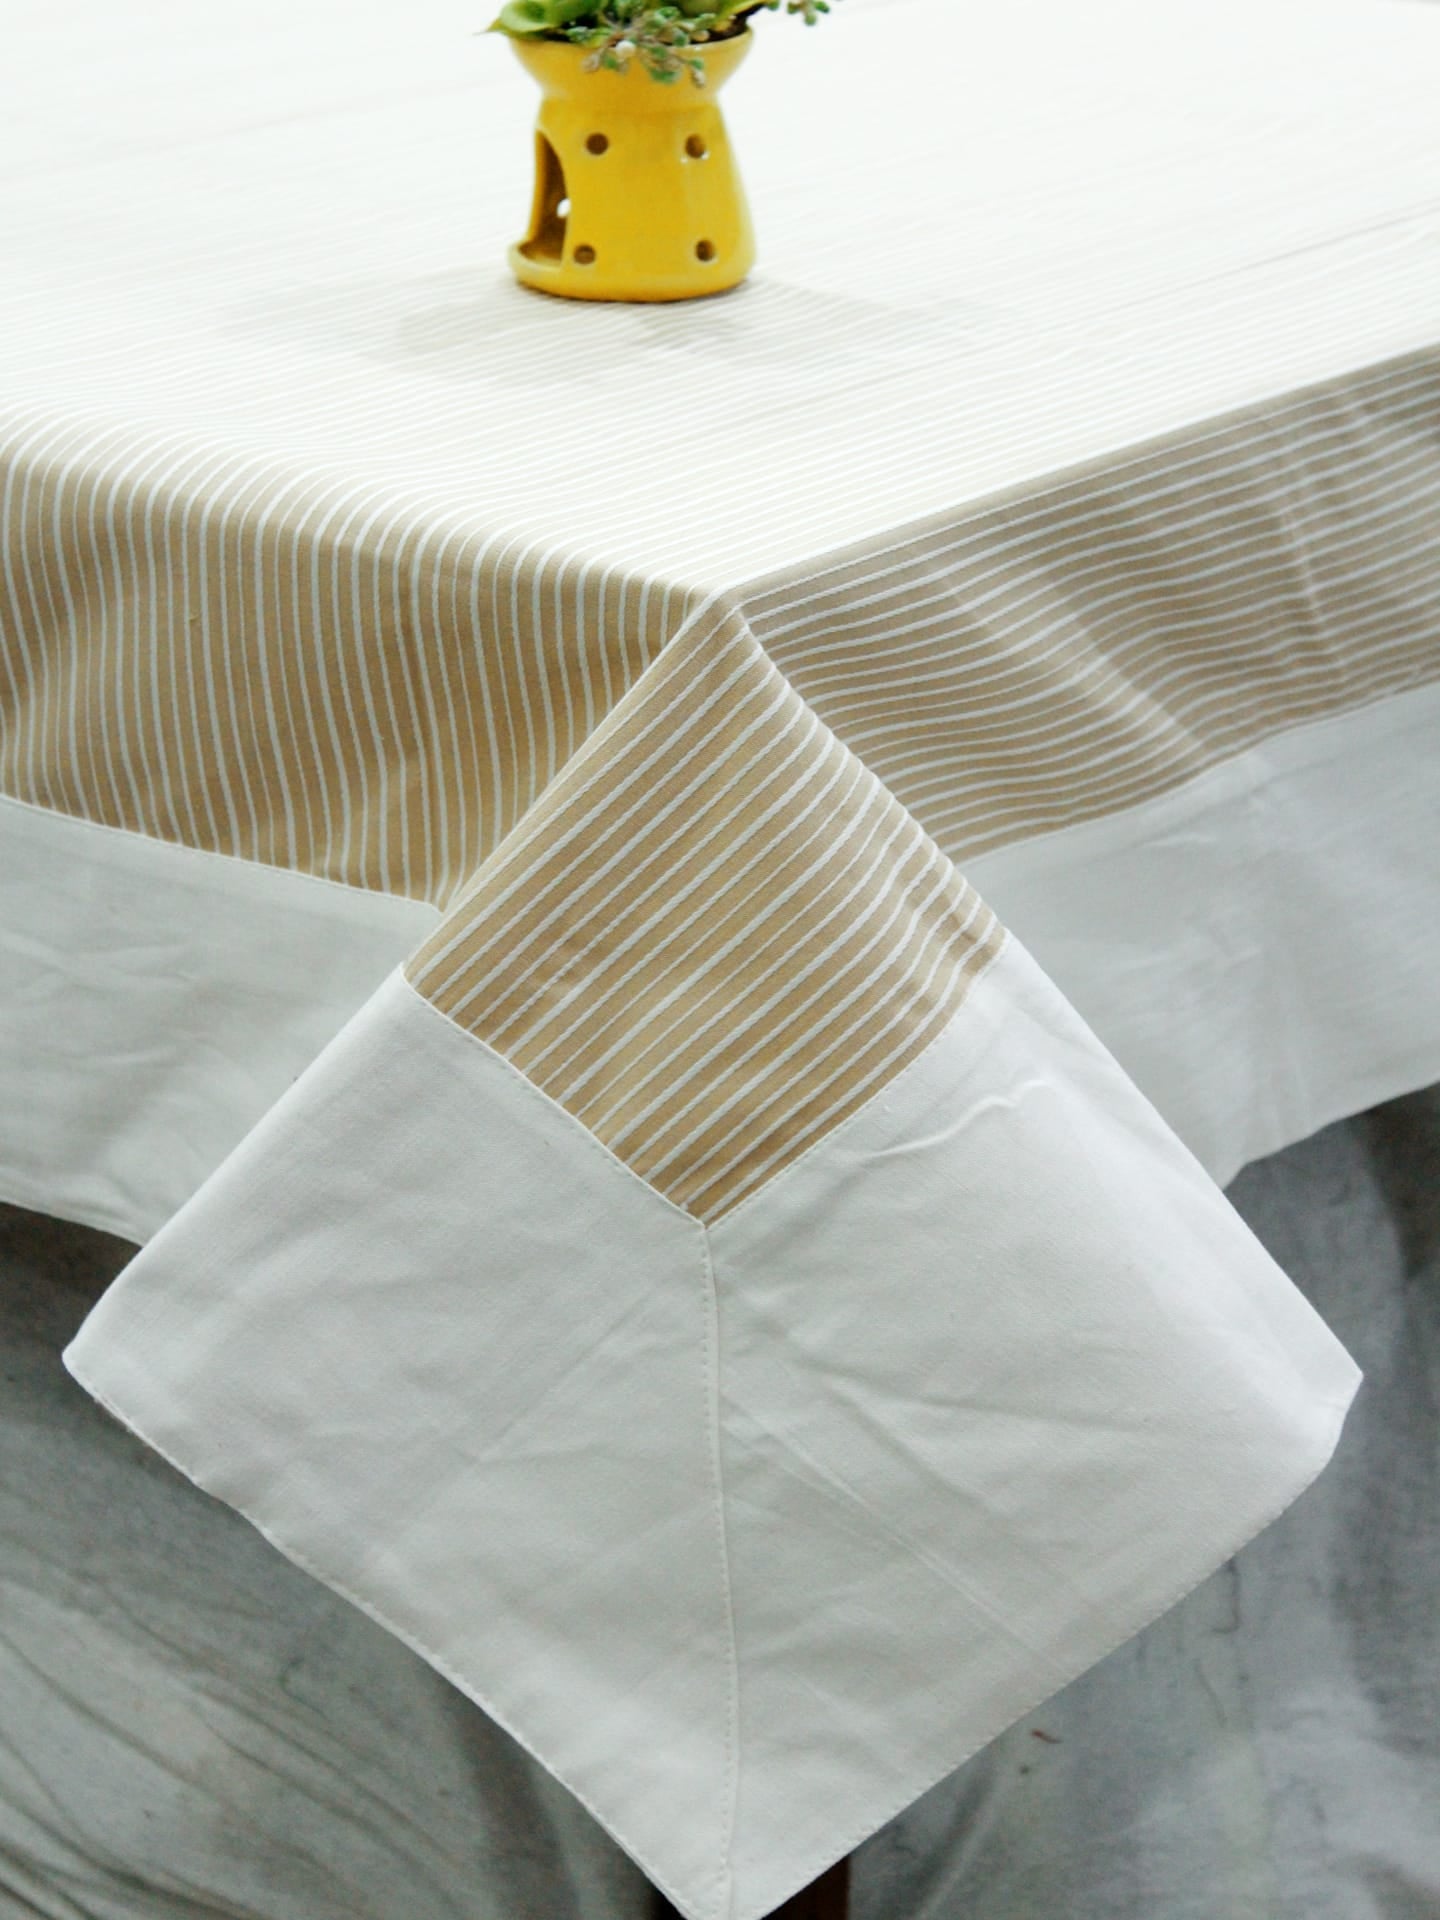 ALPHA Woven Cotton Stripes 1 Pc Table Cover - Beige & White